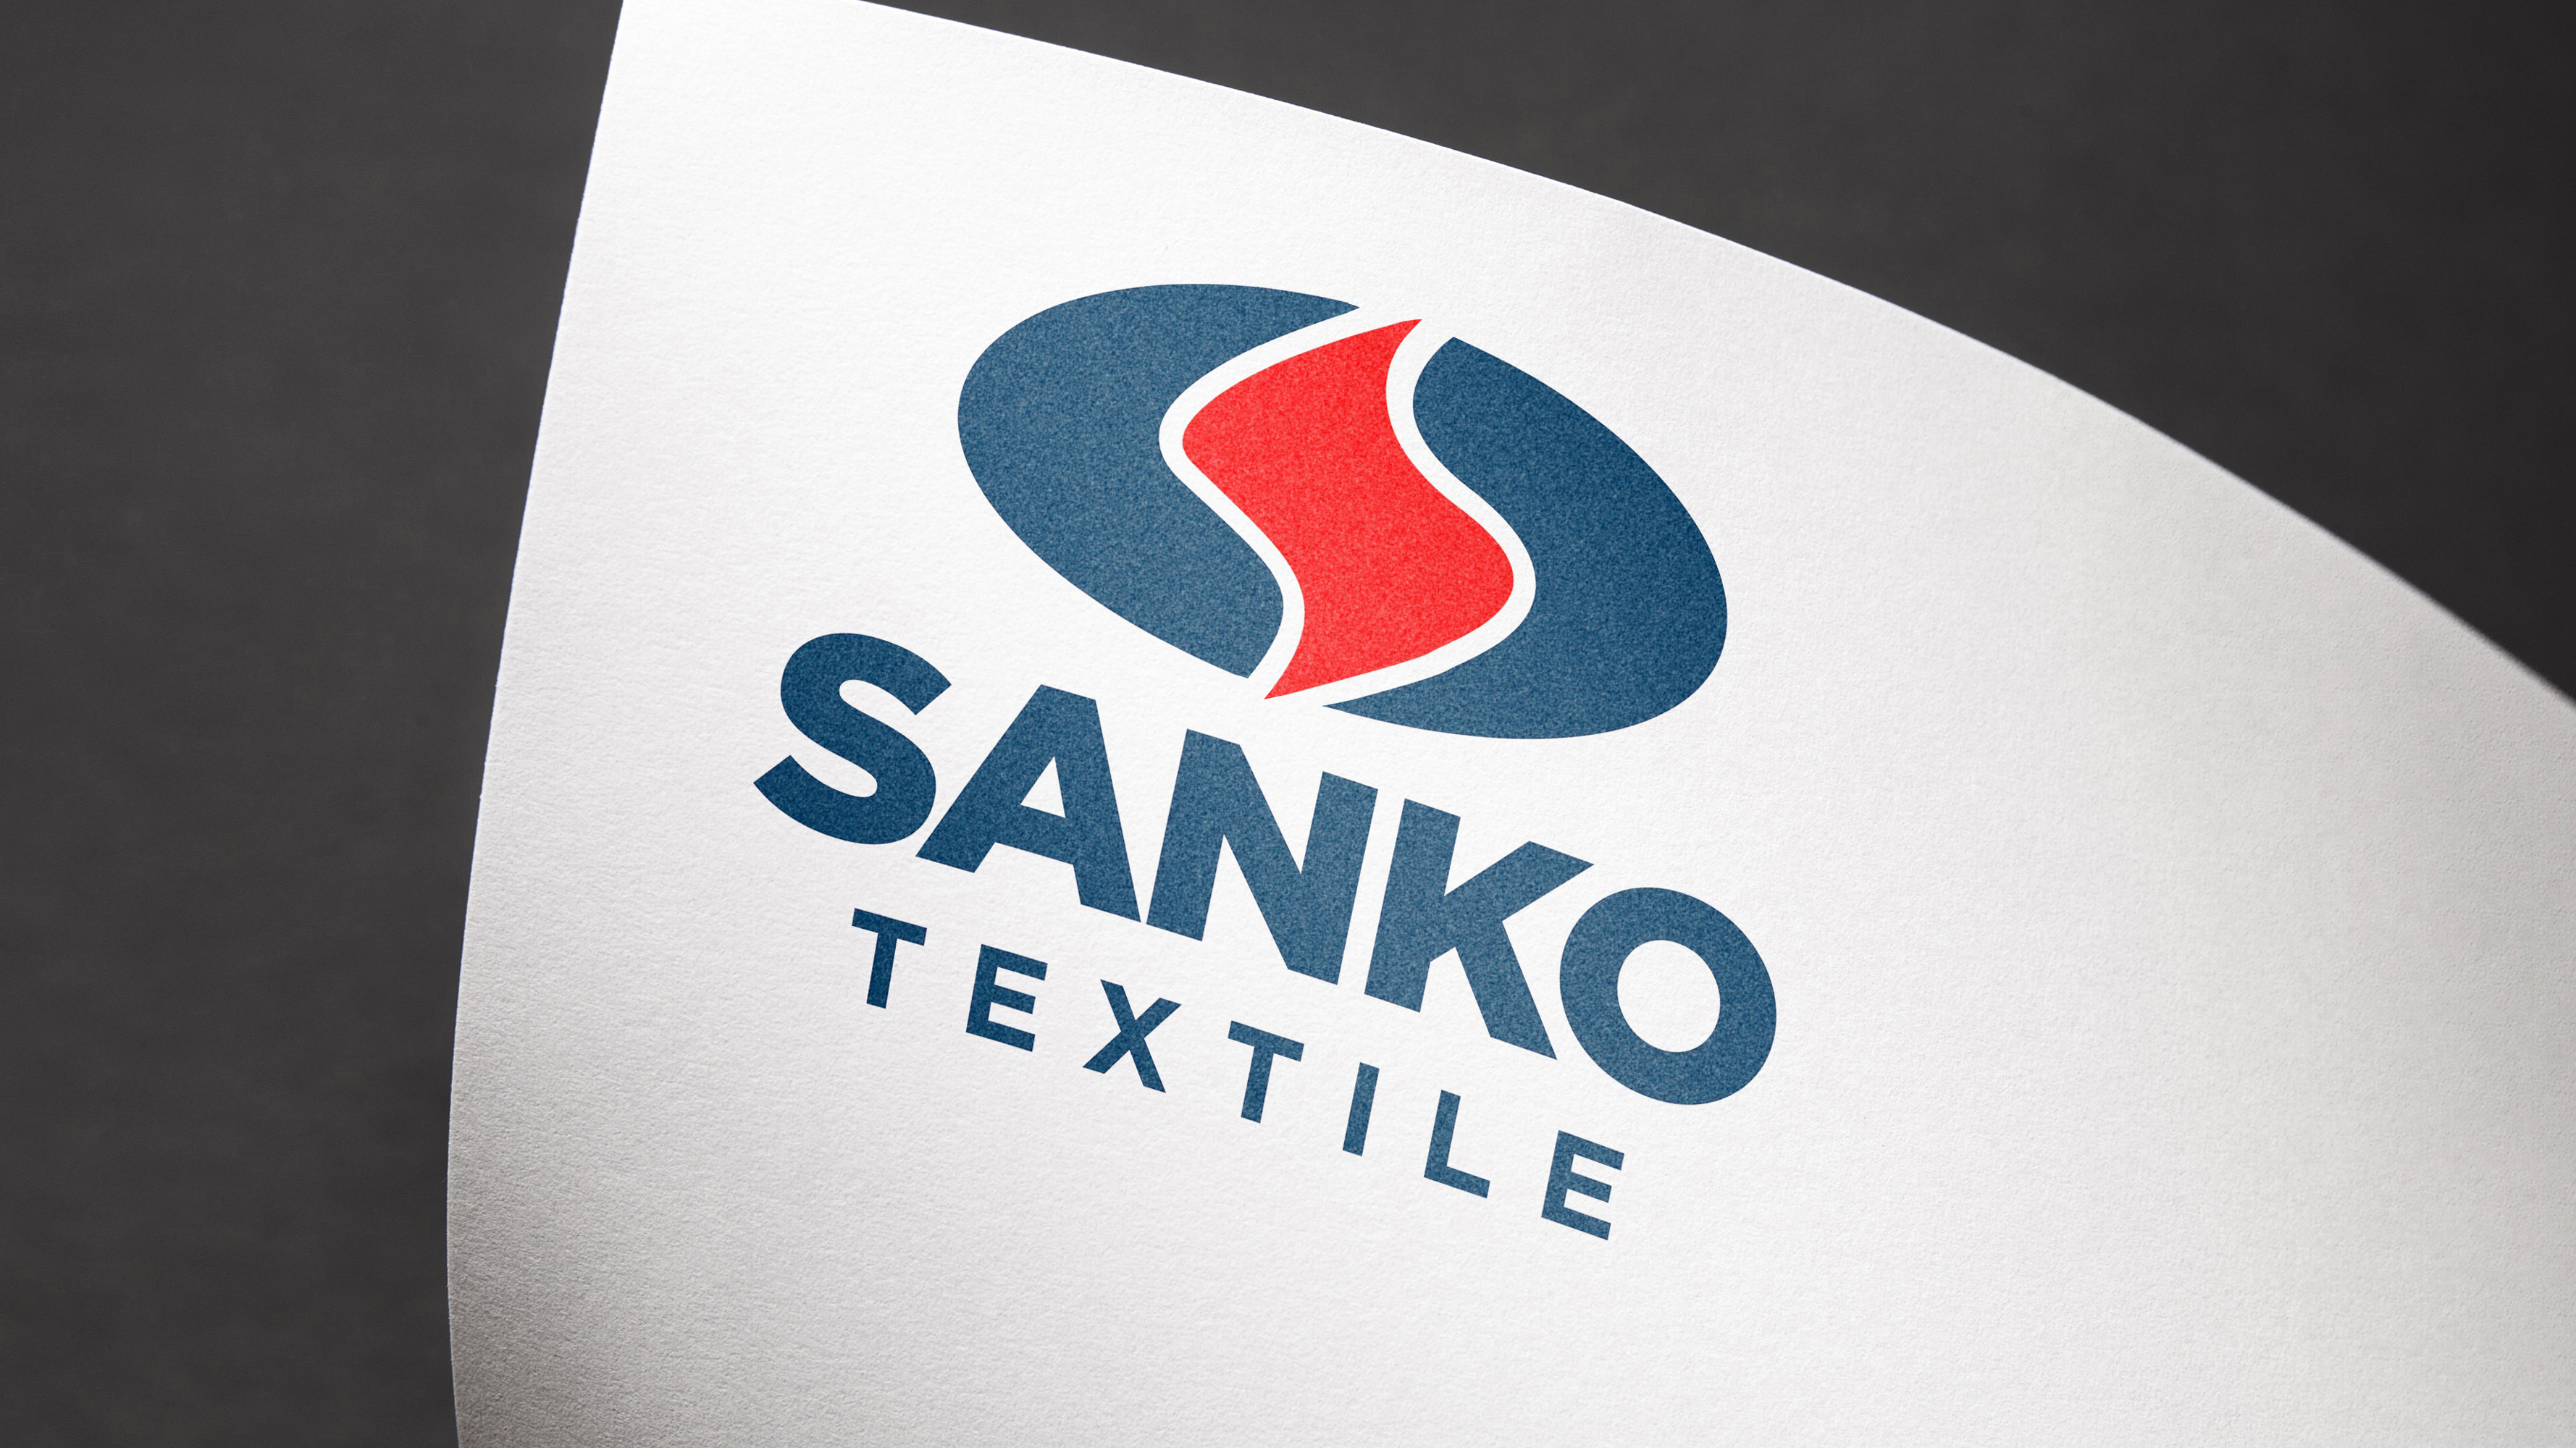 Sanko Tekstil-02